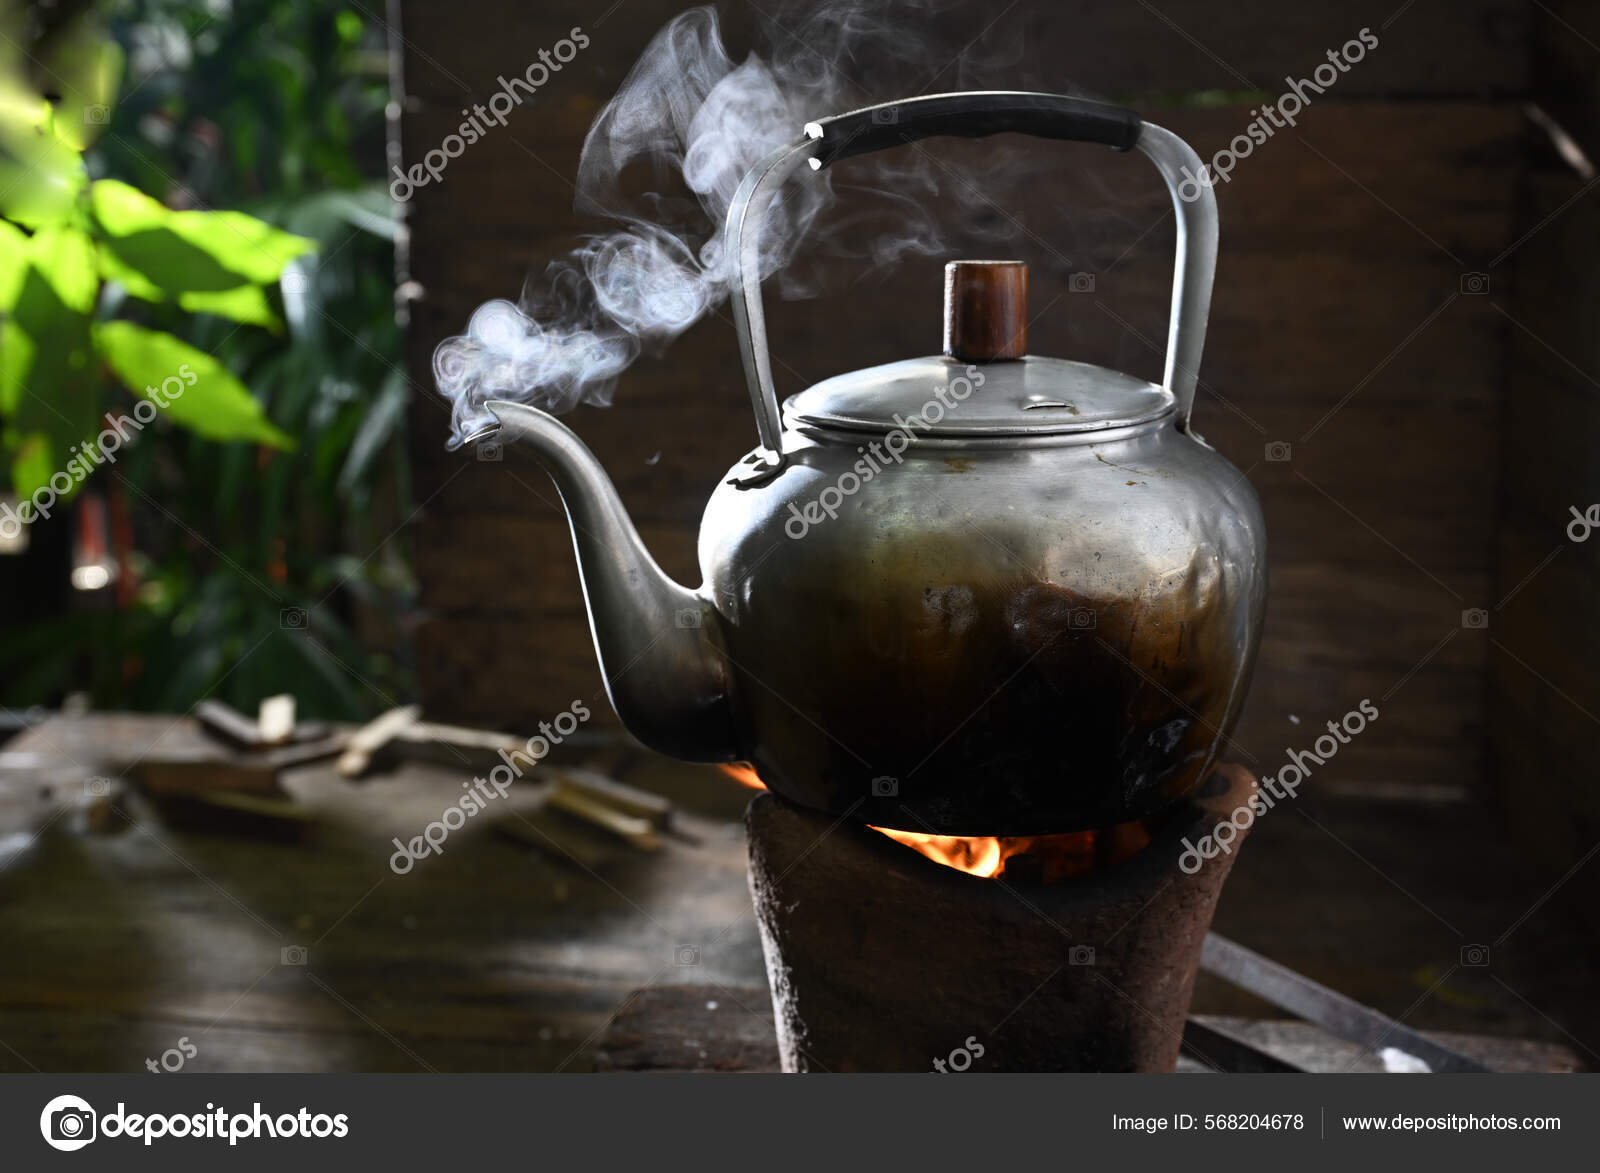 https://st.depositphotos.com/7155762/56820/i/1600/depositphotos_568204678-stock-photo-boiling-water-kattle-fire-stove.jpg